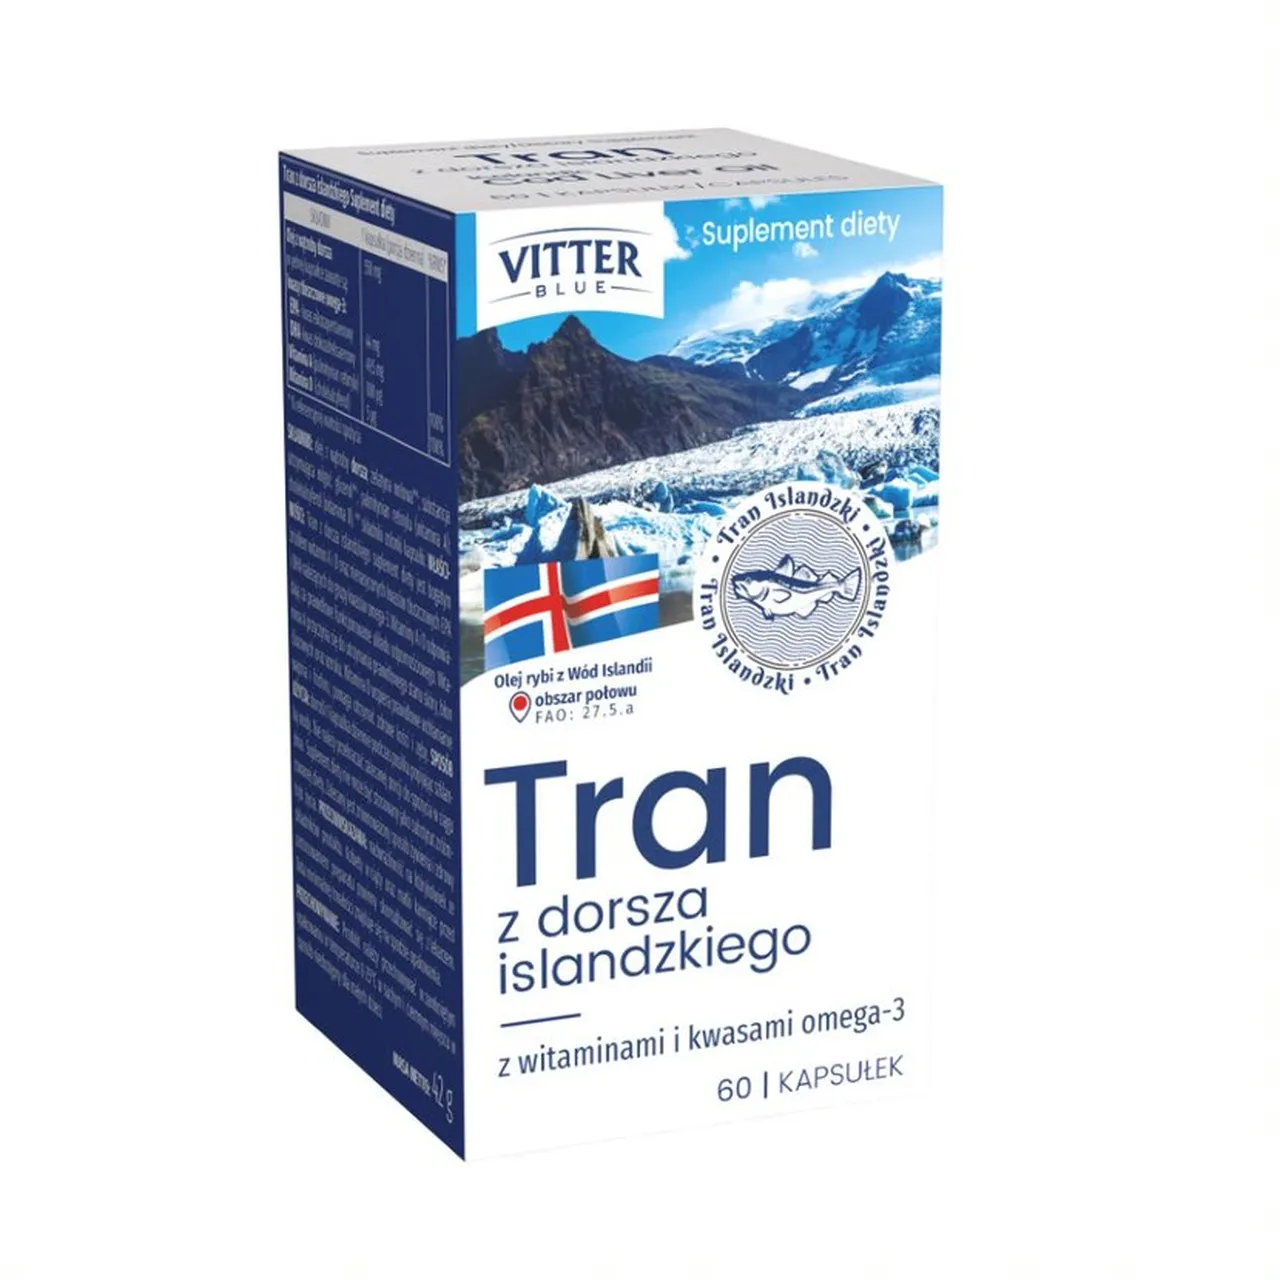 Vitter Blue Tran z Dorsza Islandzkiego, suplement diety, 60 kapsułek